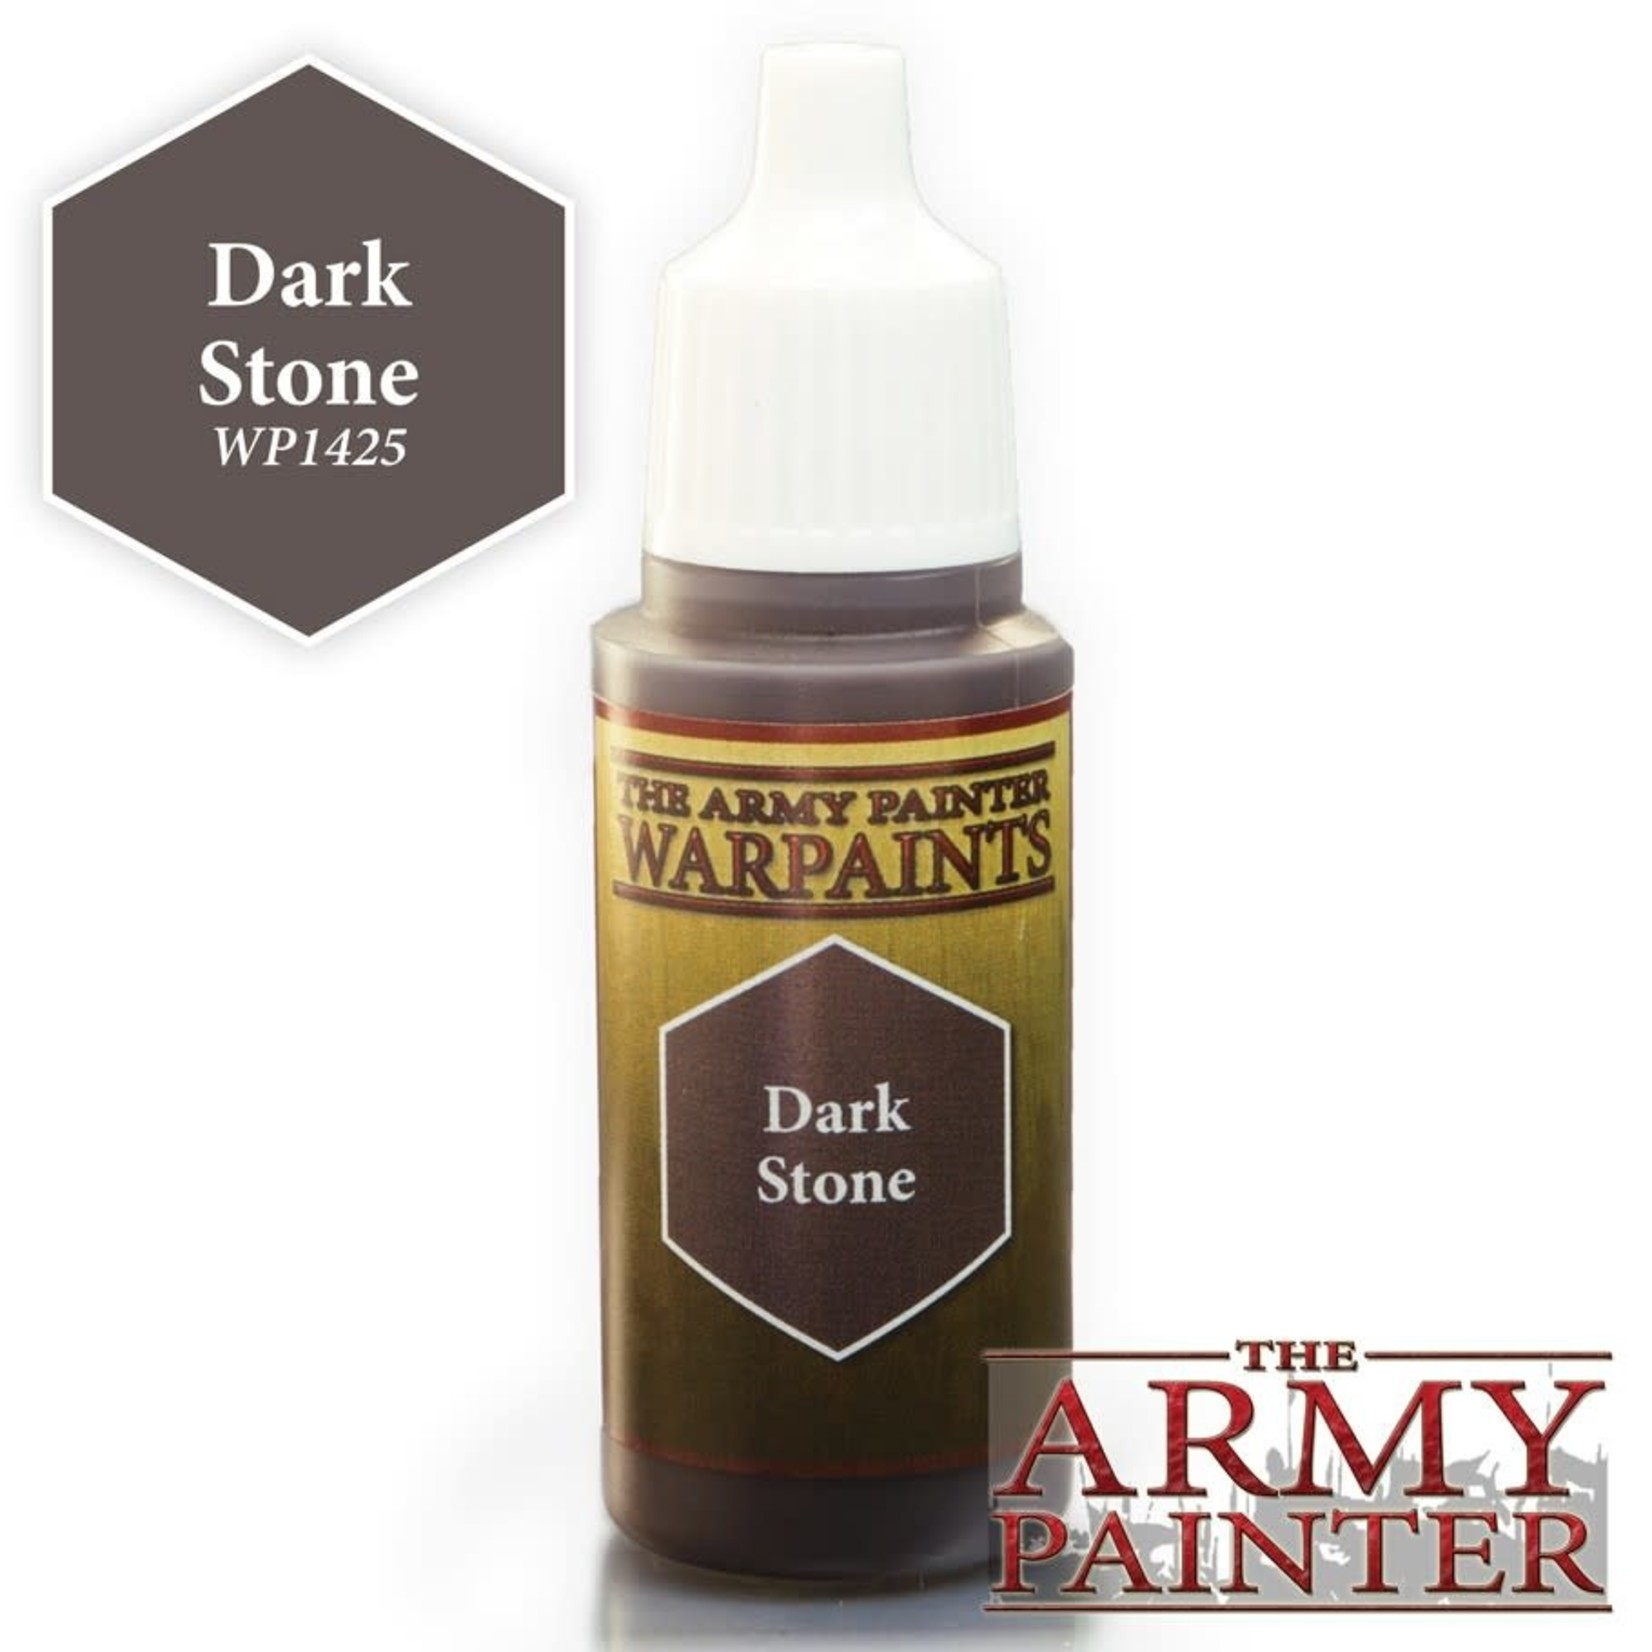 The Army Painter Warpaints: Dark Stone